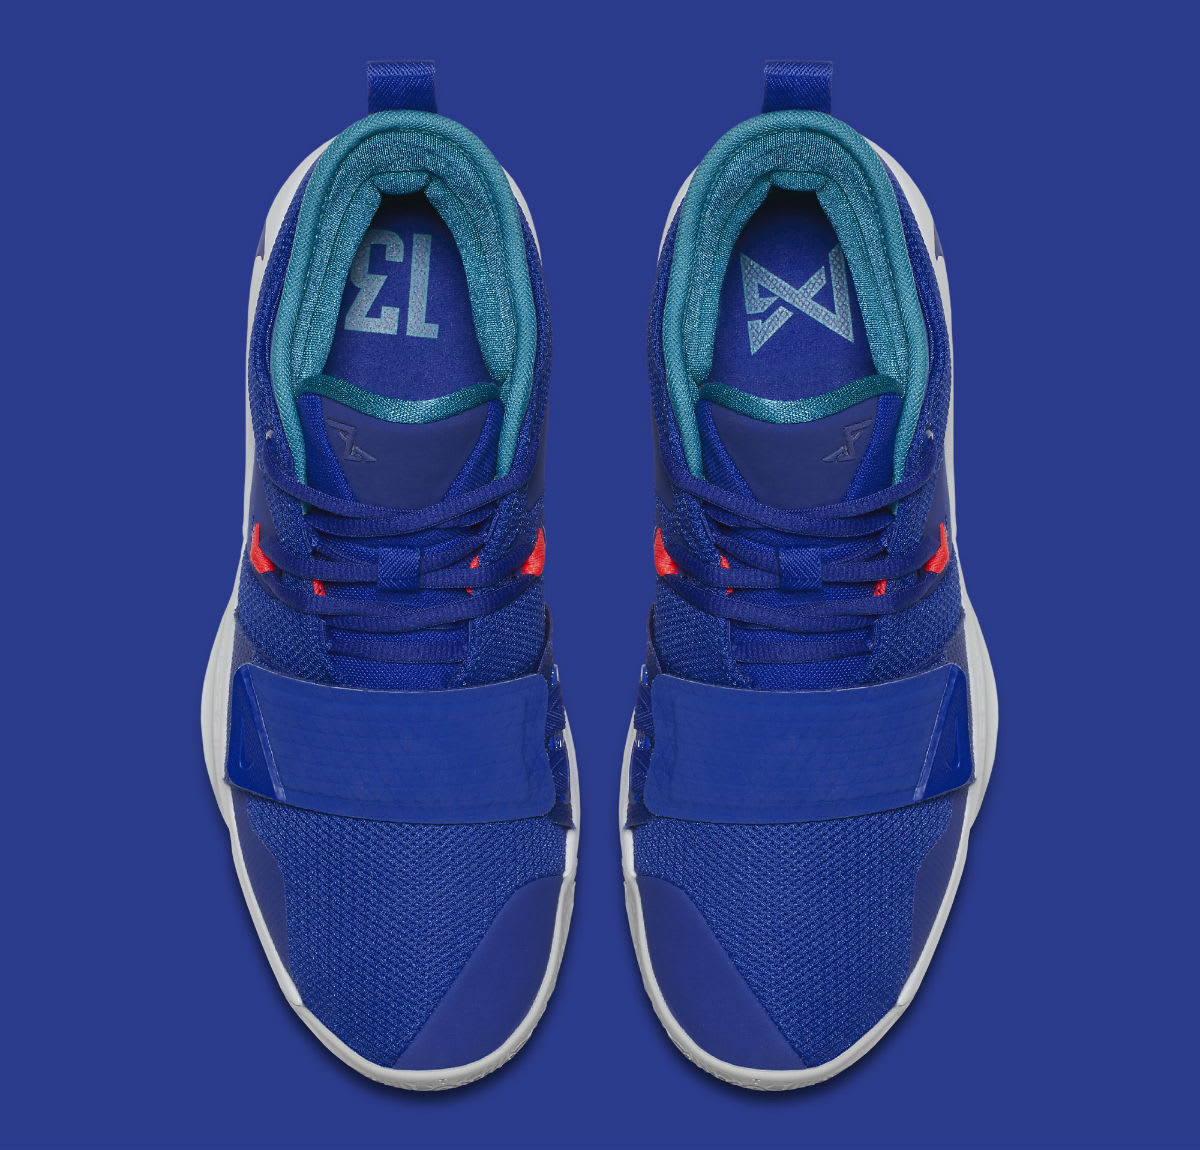 Nike PG 2.5 Fortnite Racer Blue Release Date BQ8452-401 Top